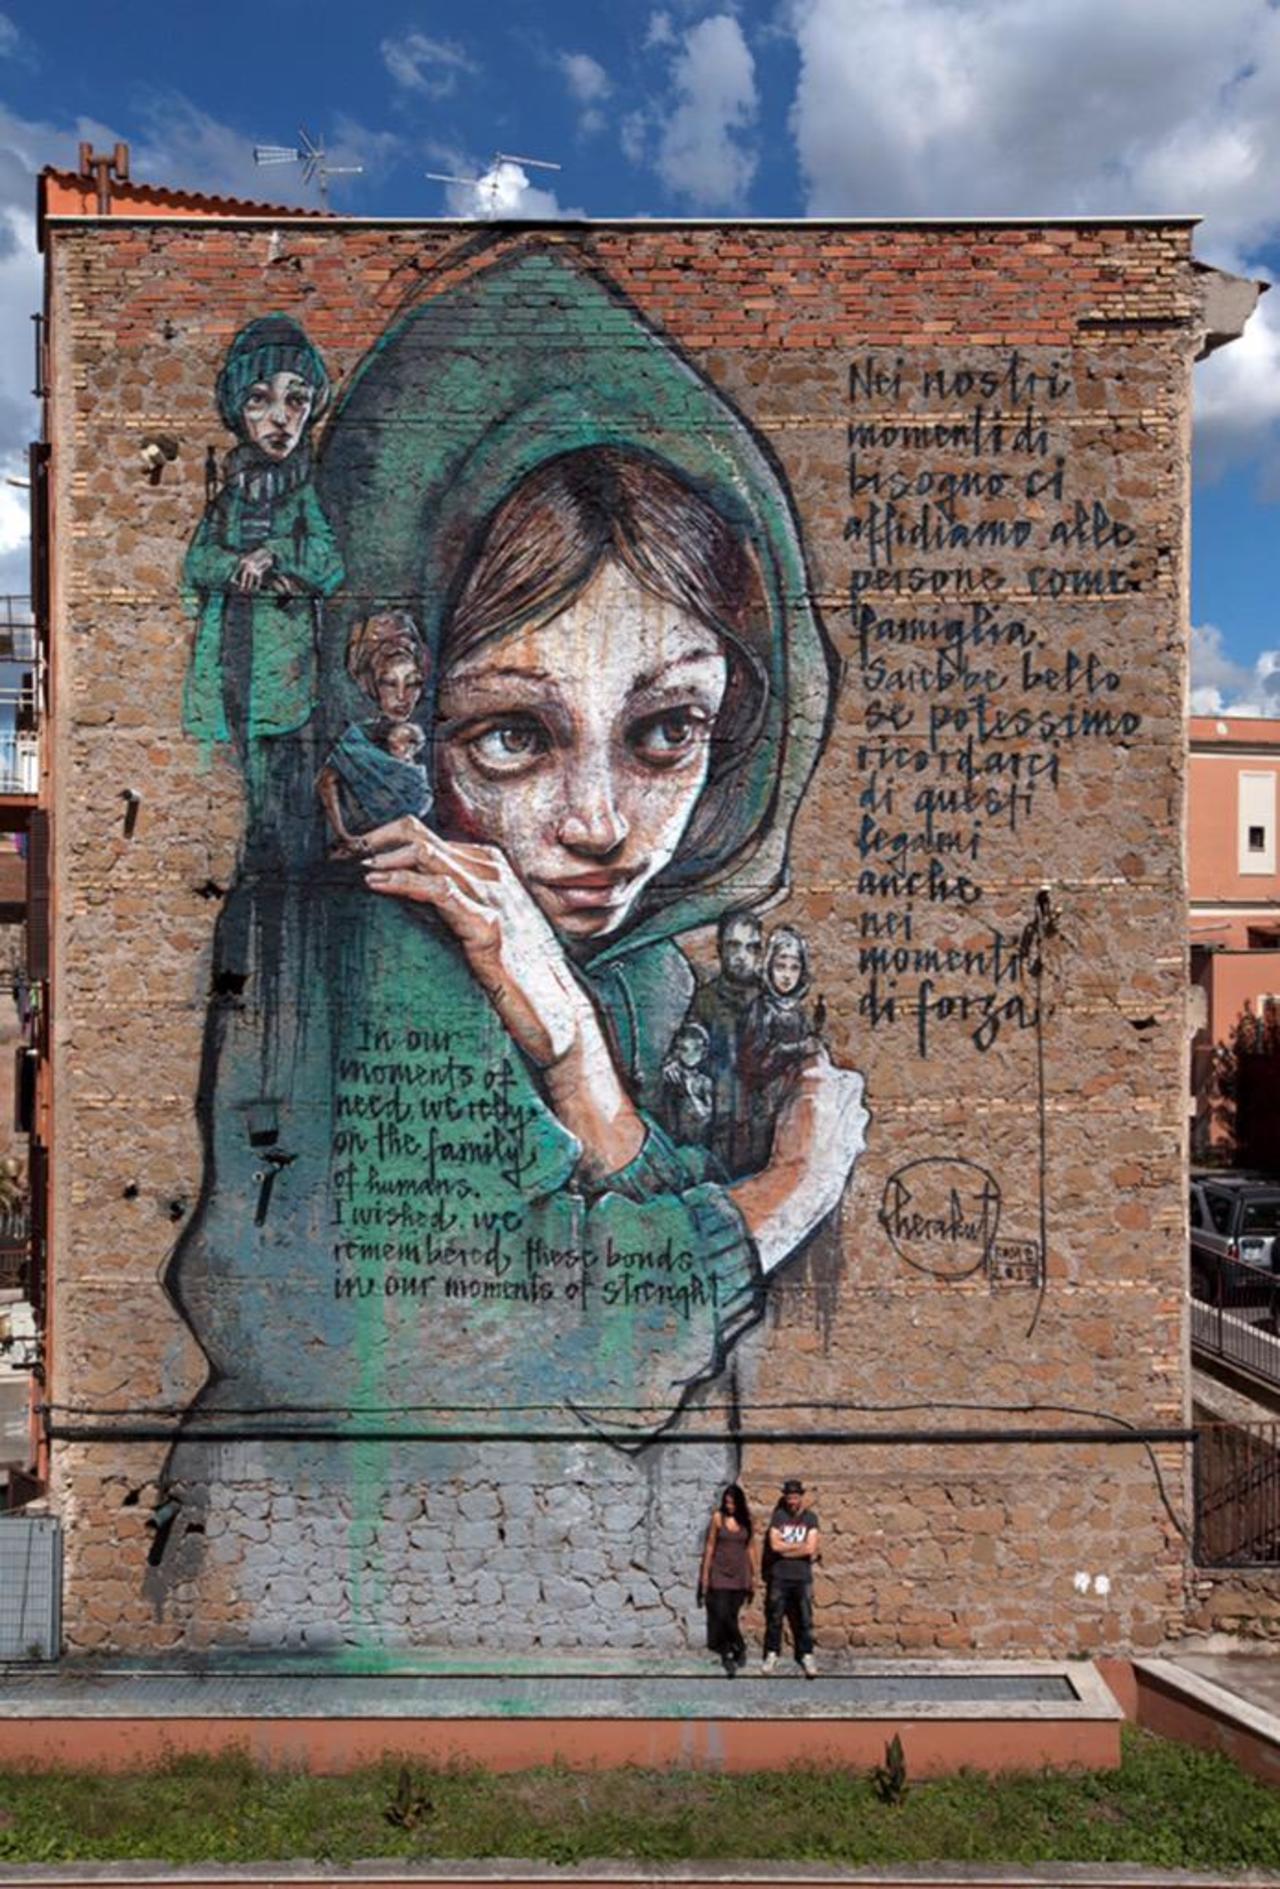 ivanchessa77: RT AuKeats: #Herakut creates a new #mural in #Rome #Italy #switch #streetart #graffiti #bedifferent … http://t.co/CkgXx6pajW